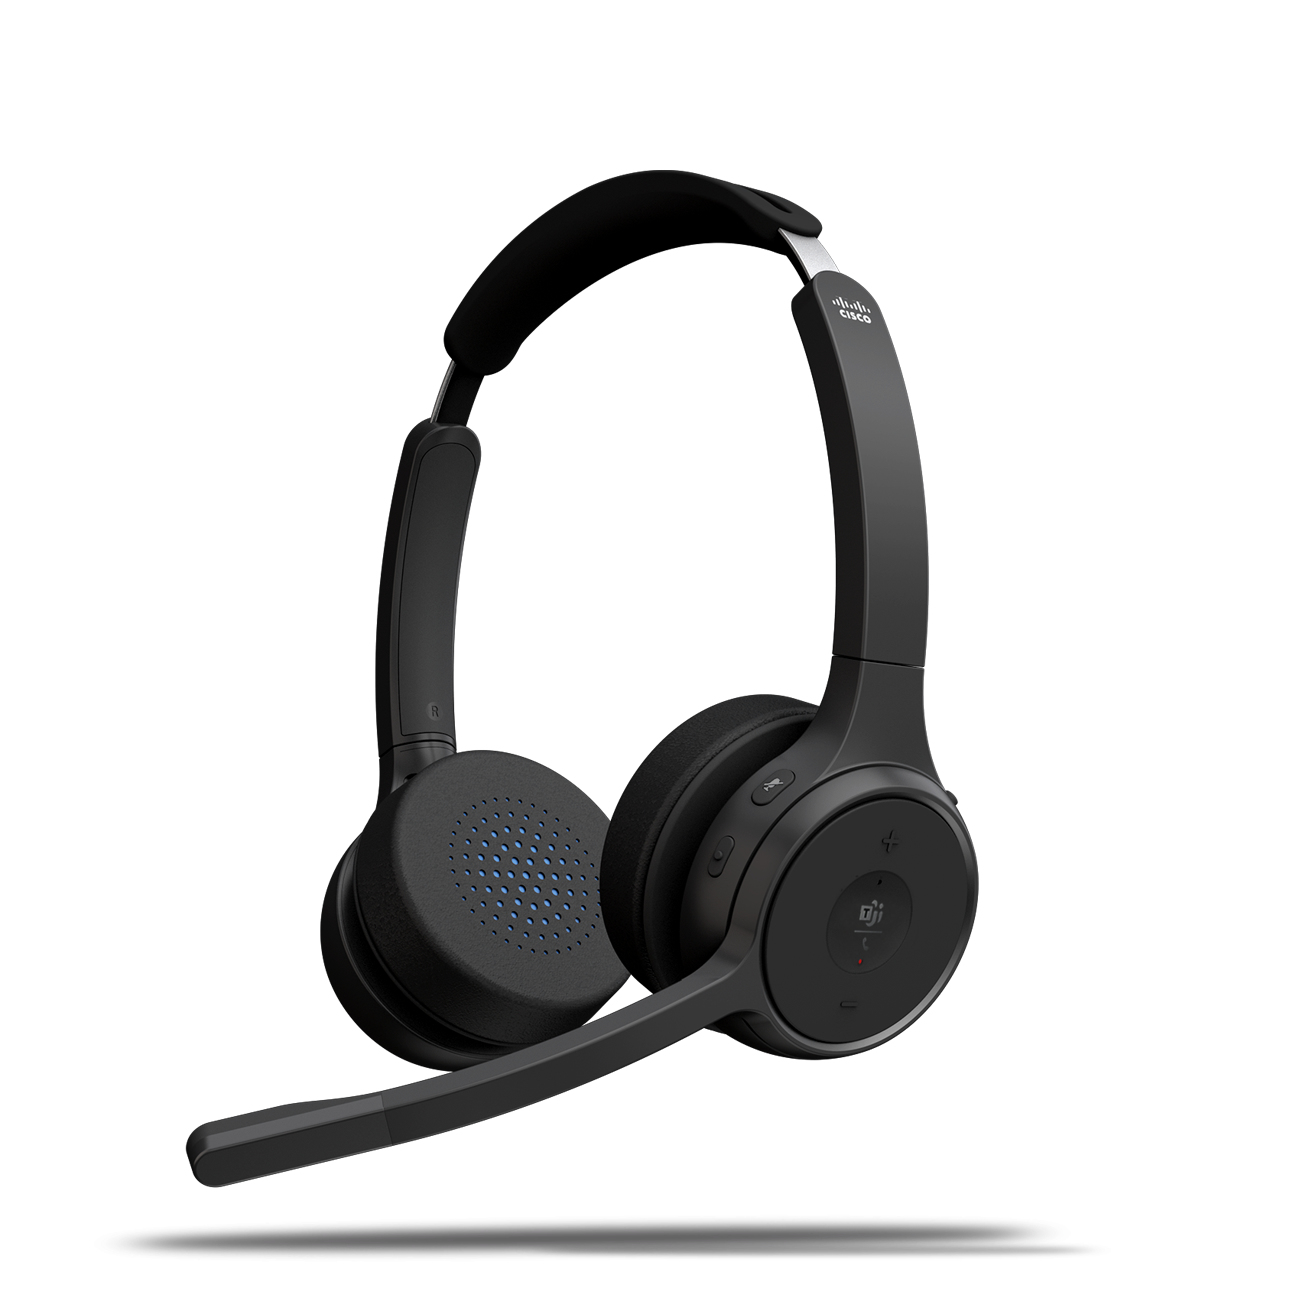 Cisco Headset 722 - Headset - On-Ear - Bluetooth